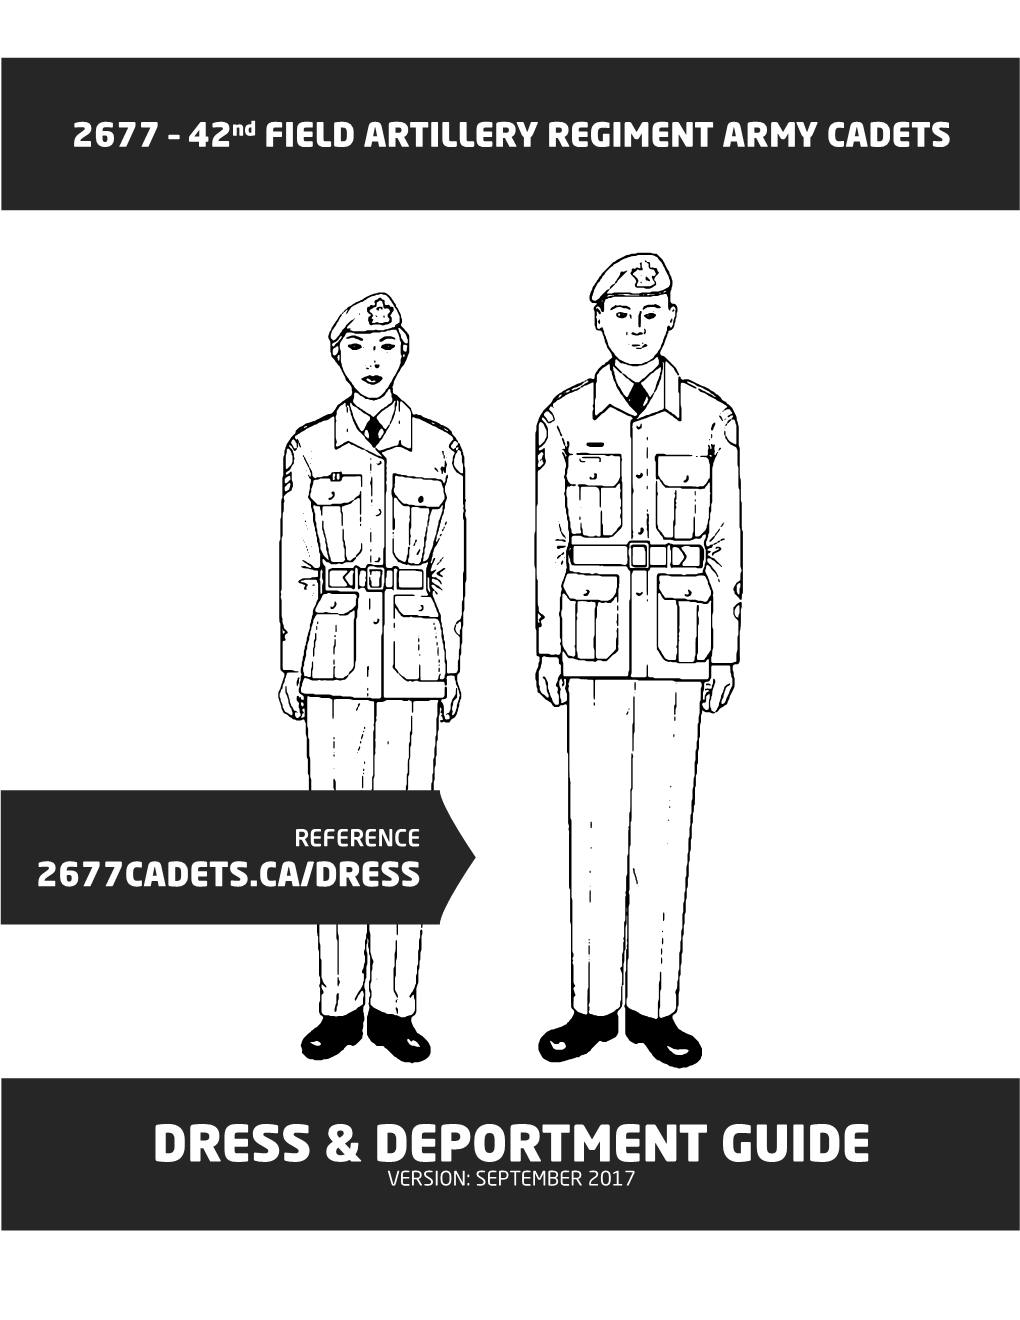 Dress & Deportment Guide